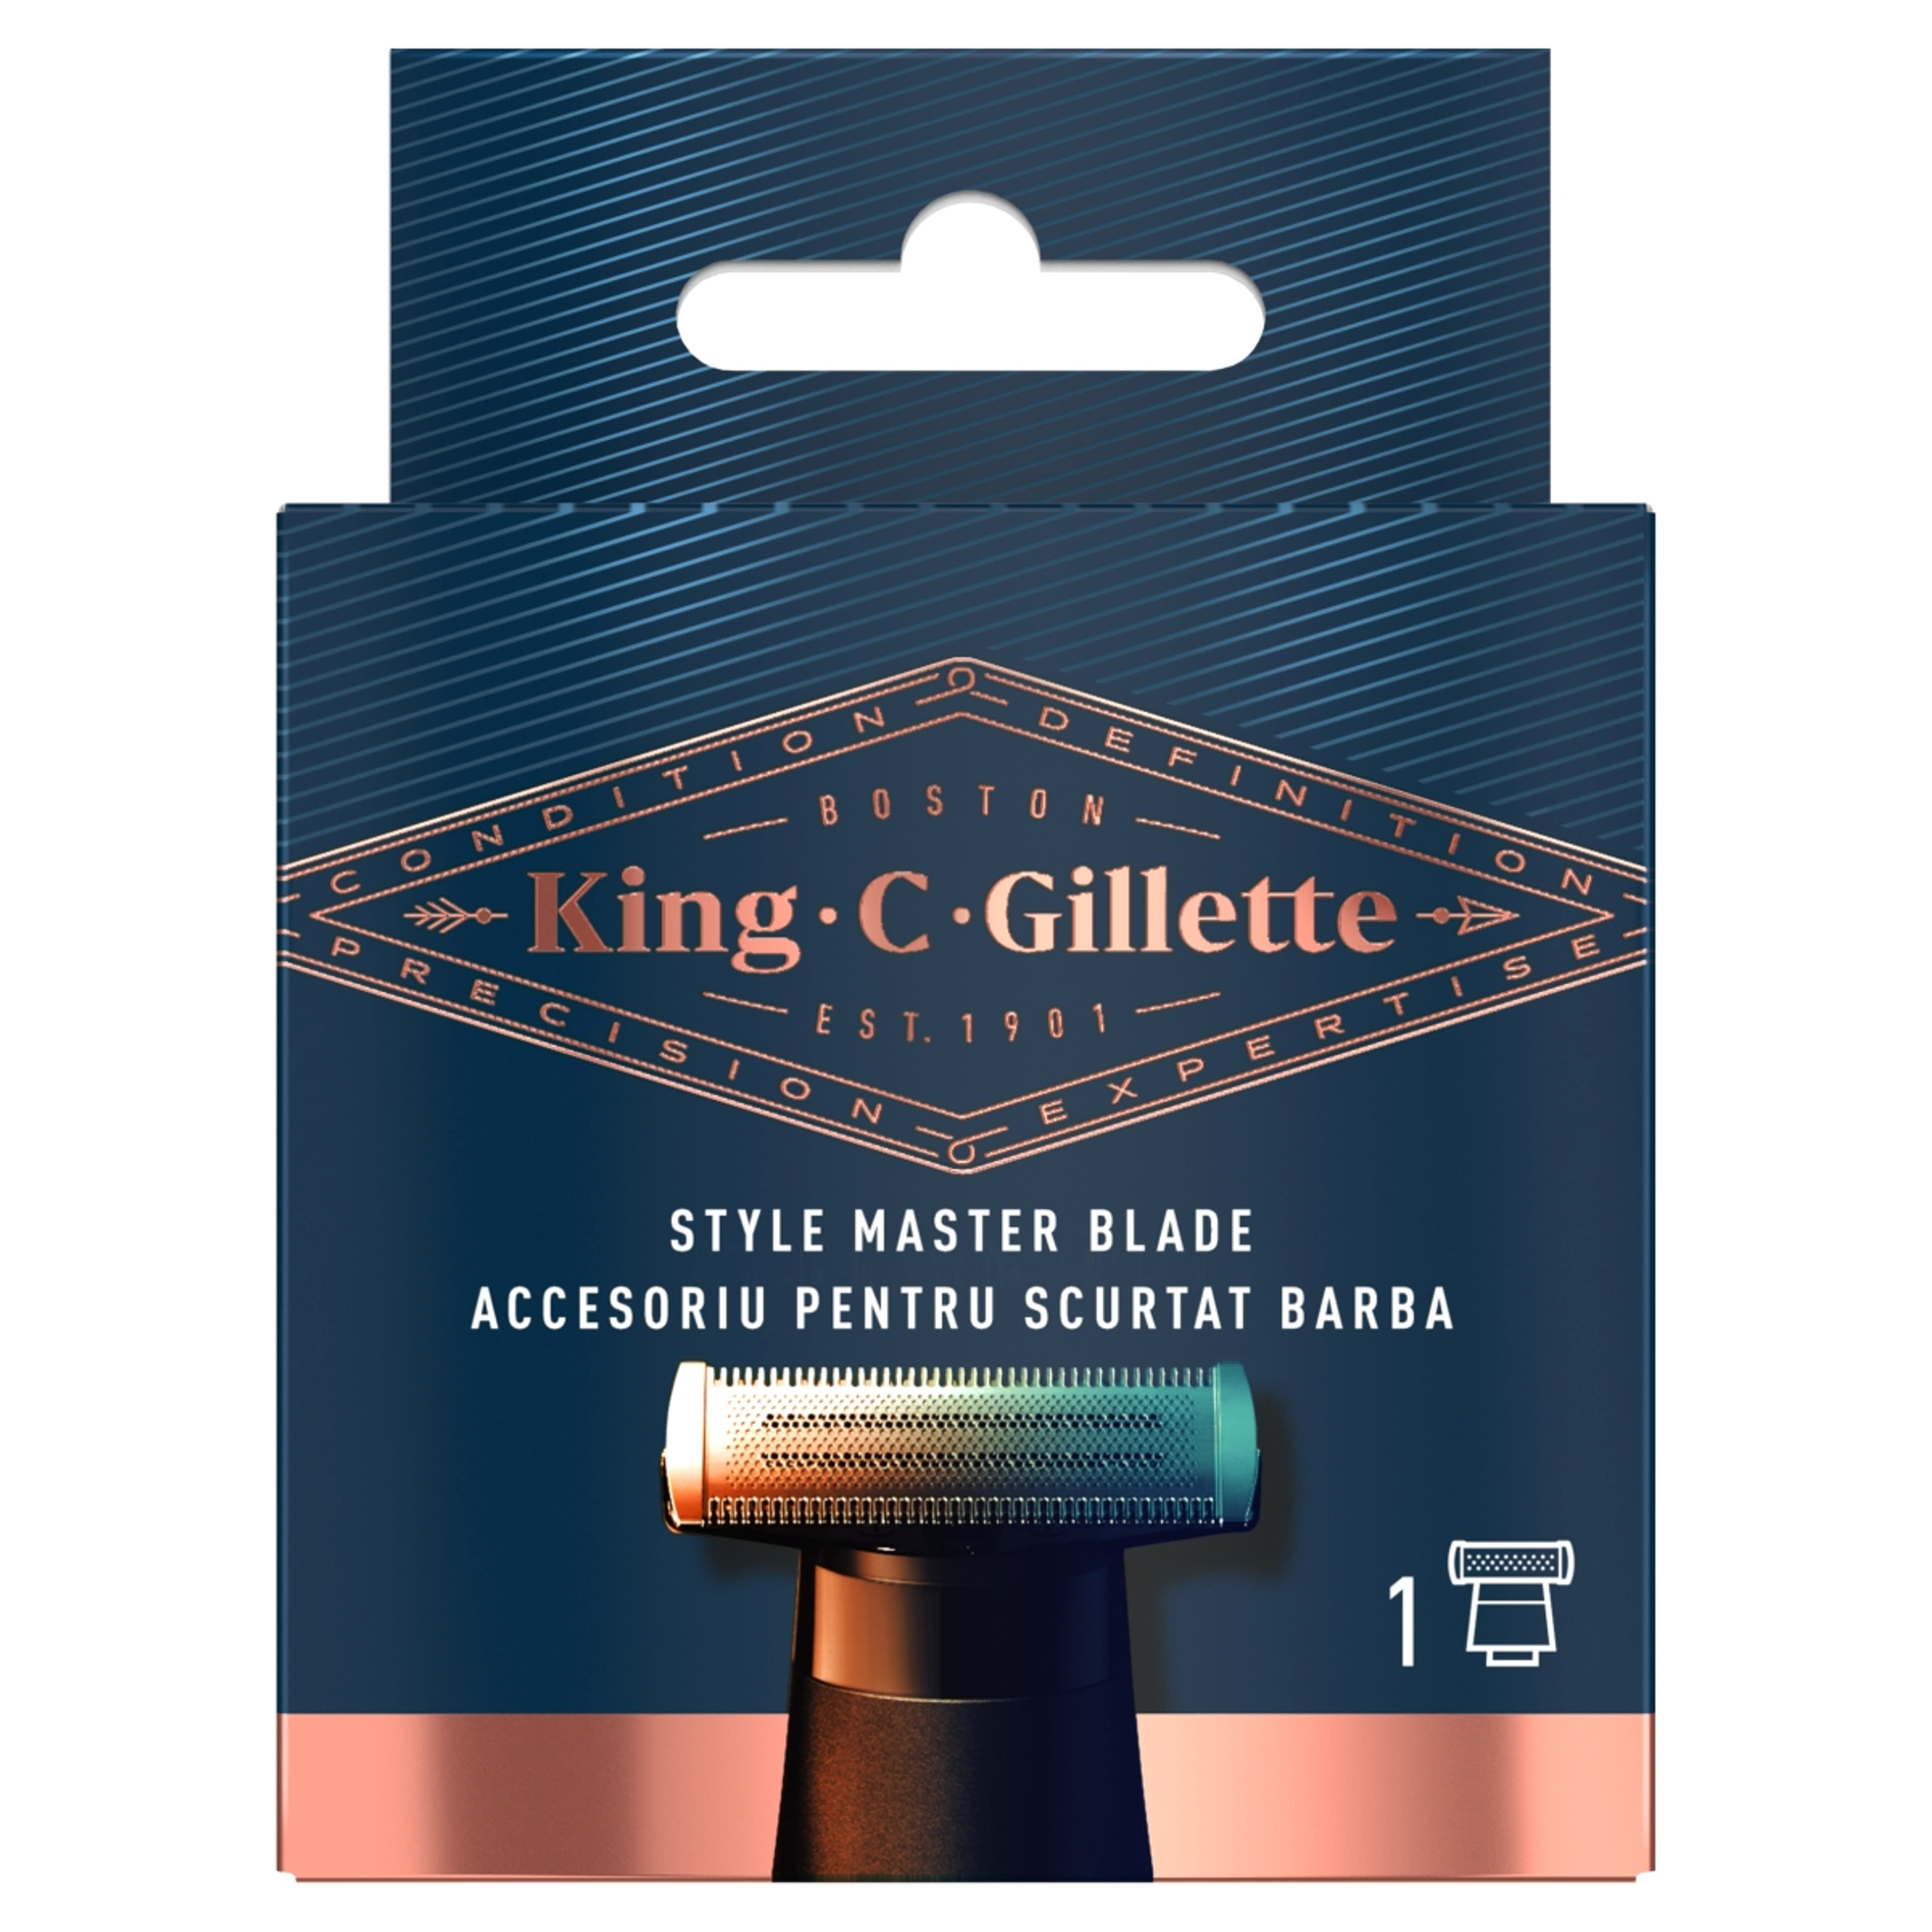 King C. Gillette Style Master borotvabetét - 1 db